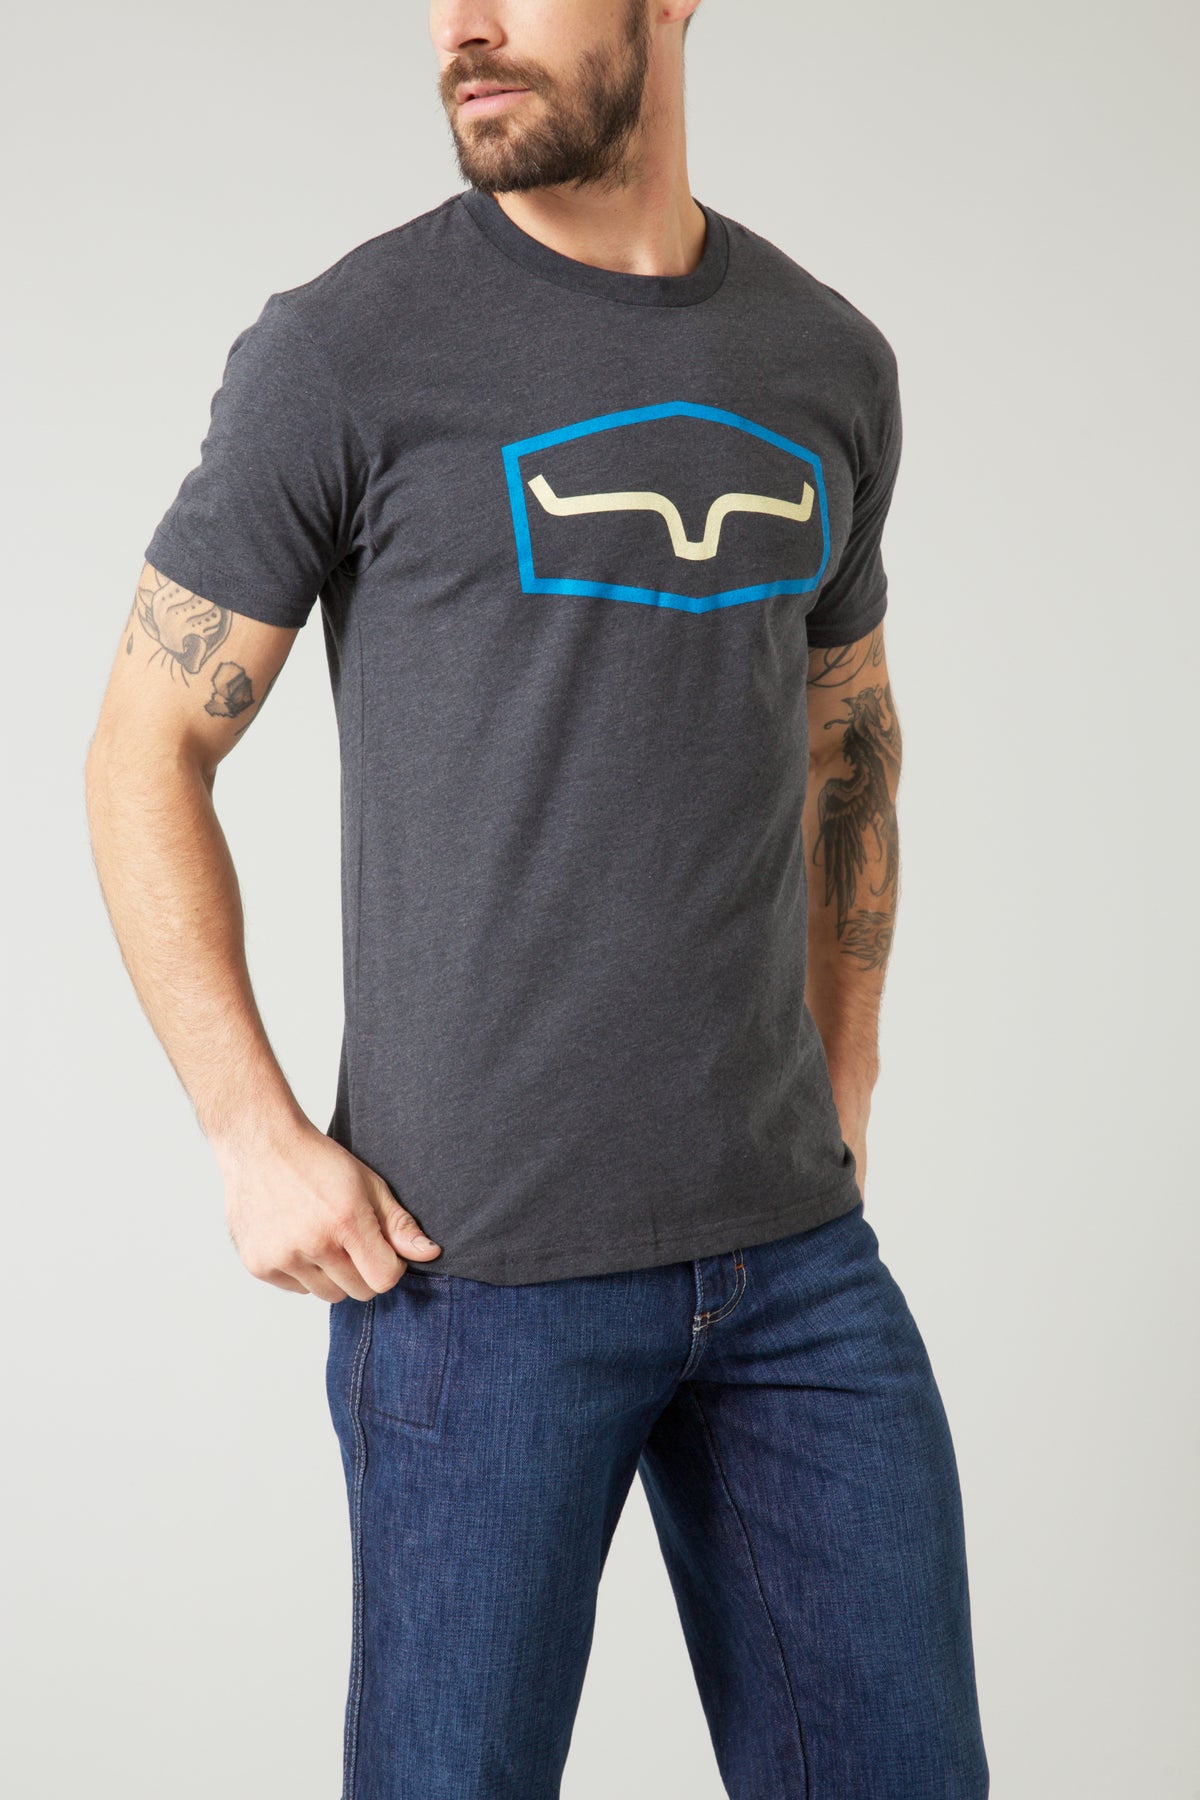 Replay Tee Shirt - Mens Shirt - Kimes Ranch | Kimes Ranch | T-Shirts